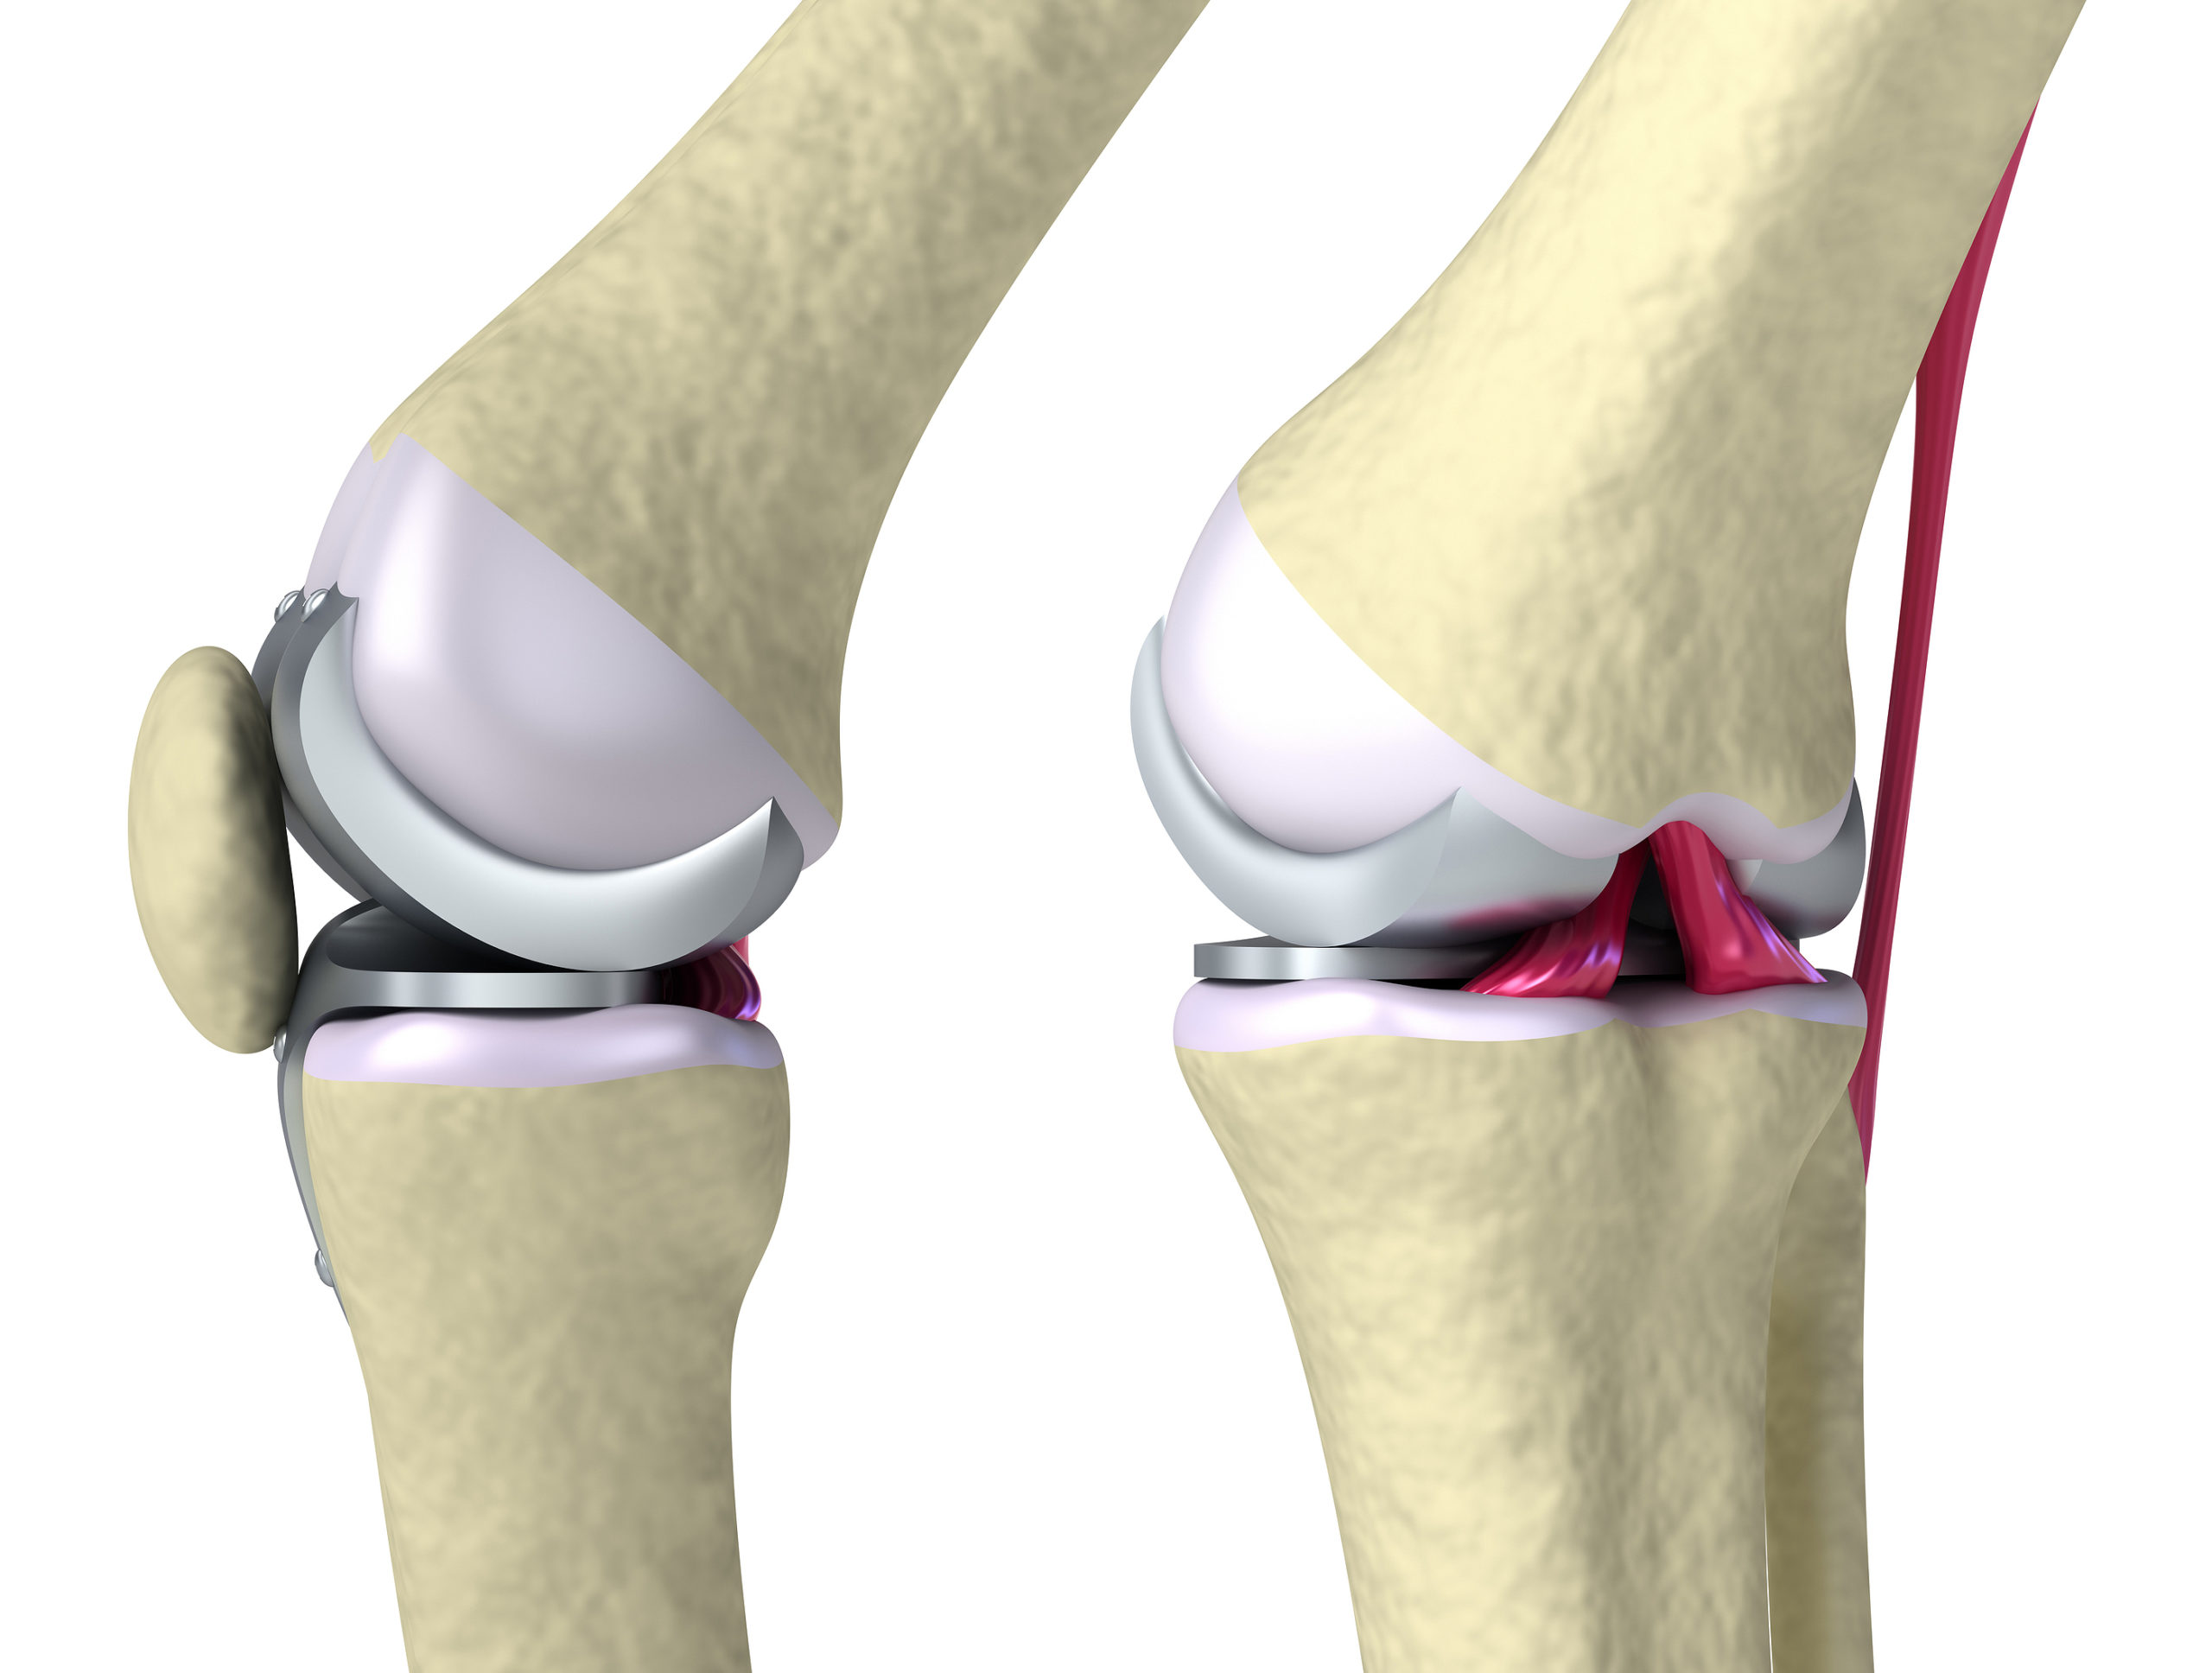 knee orthopedic device implant